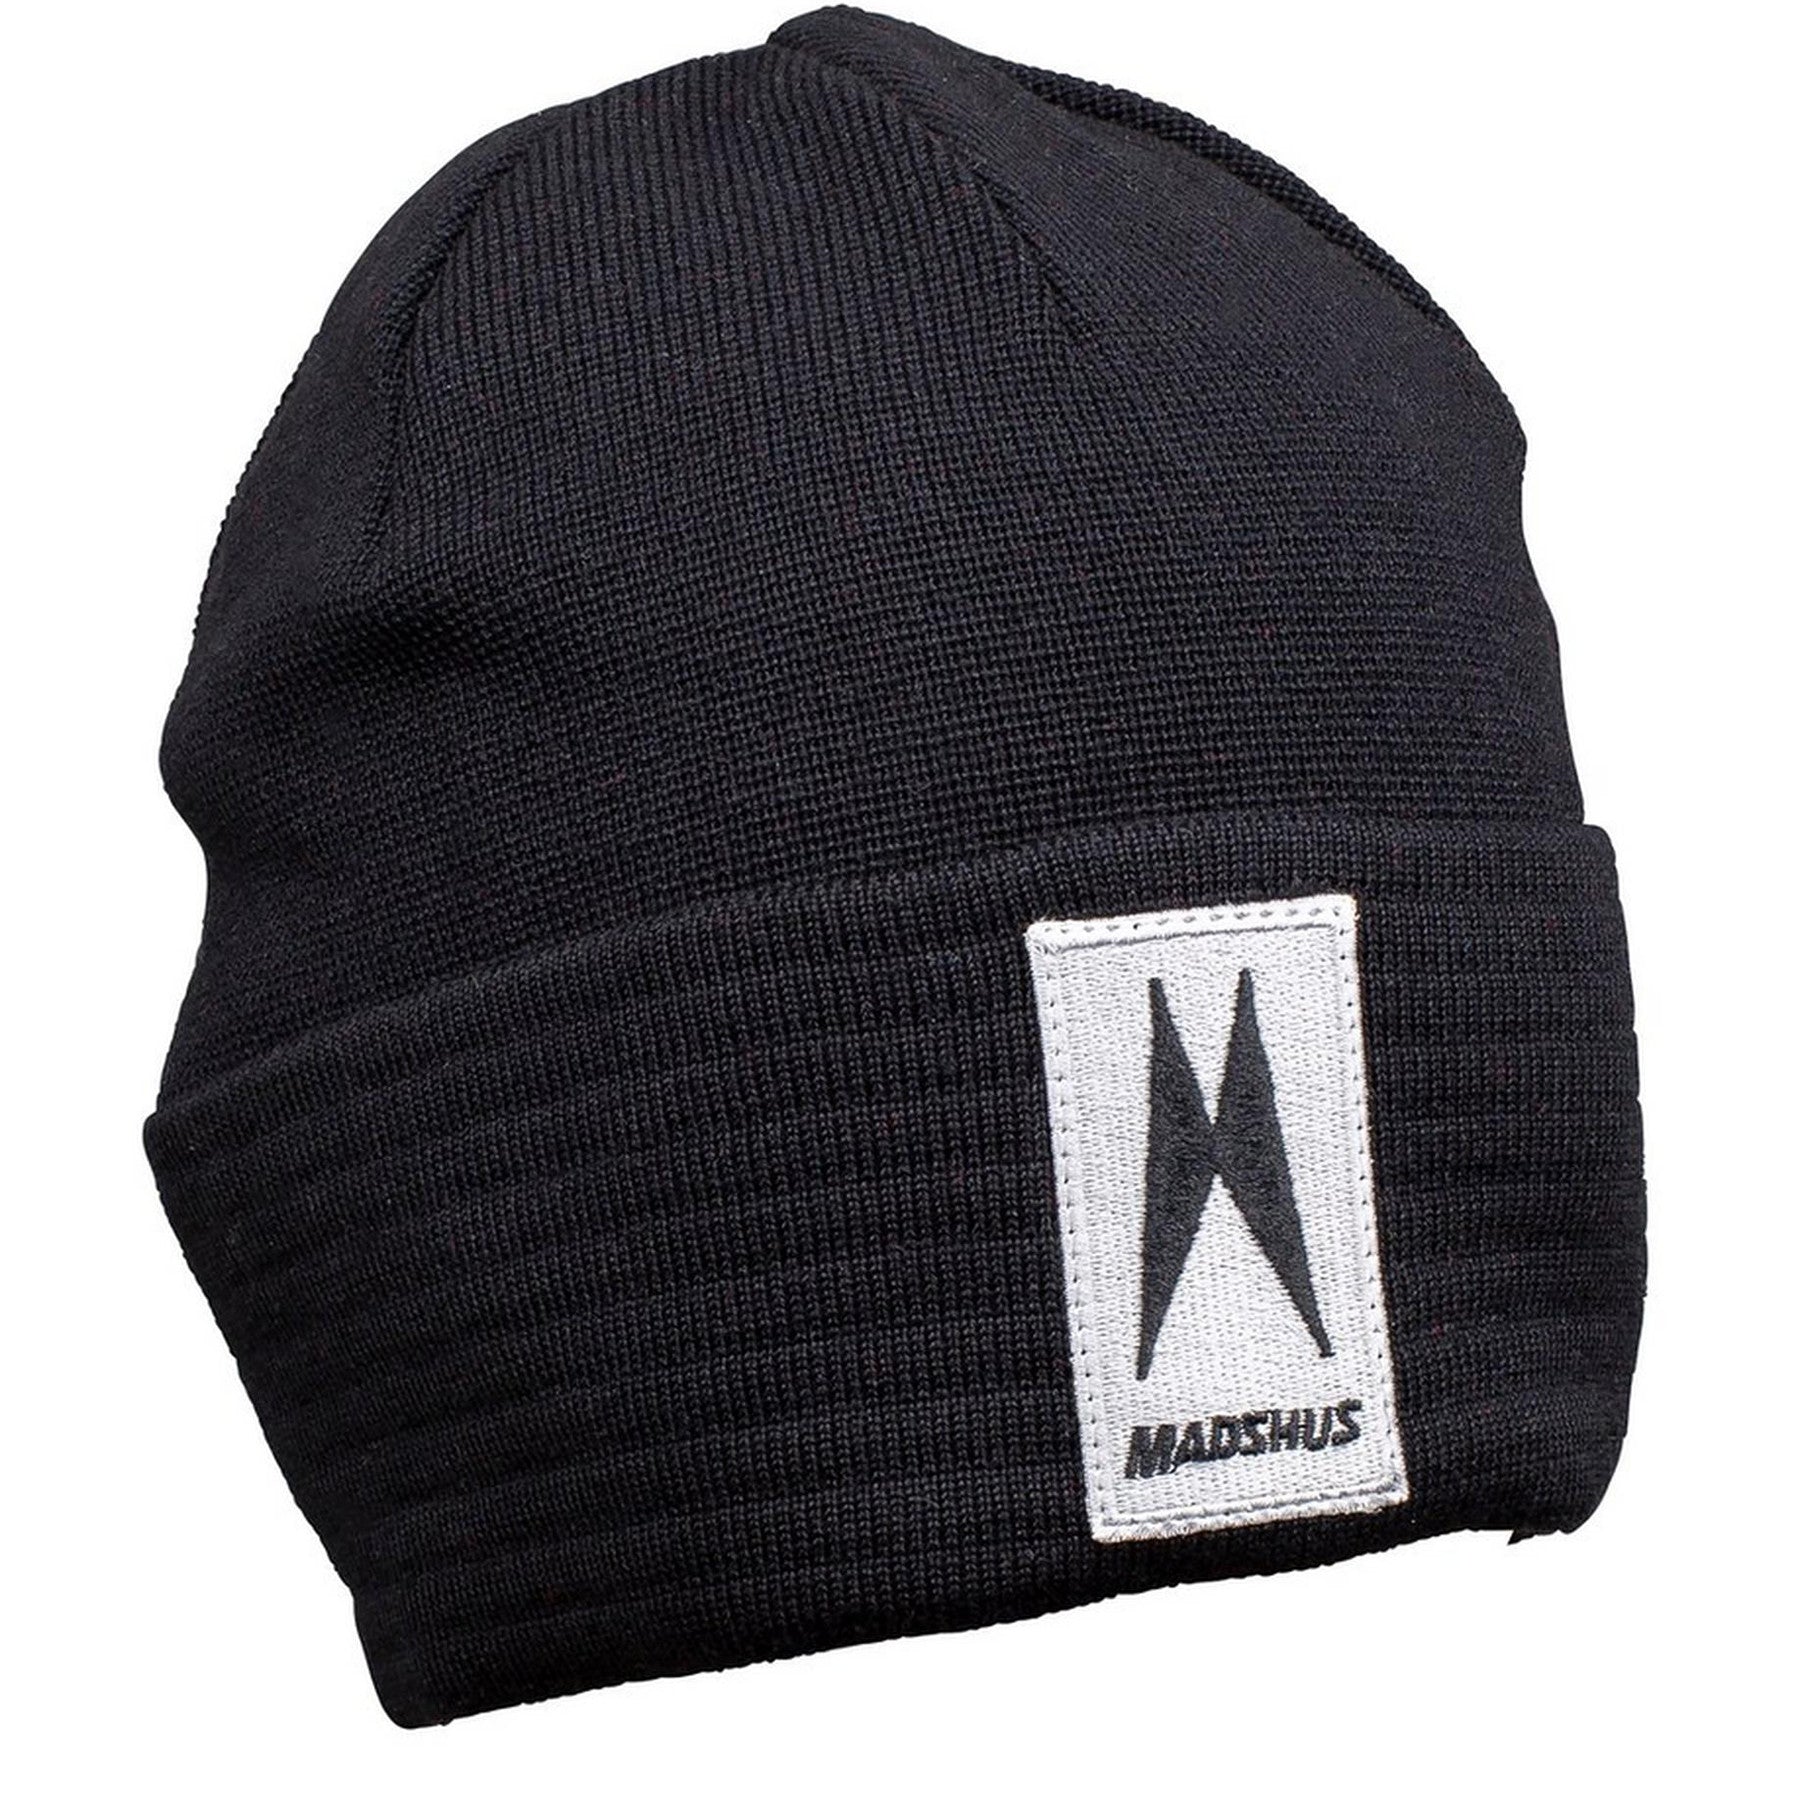 Buy black Madshus M Hat